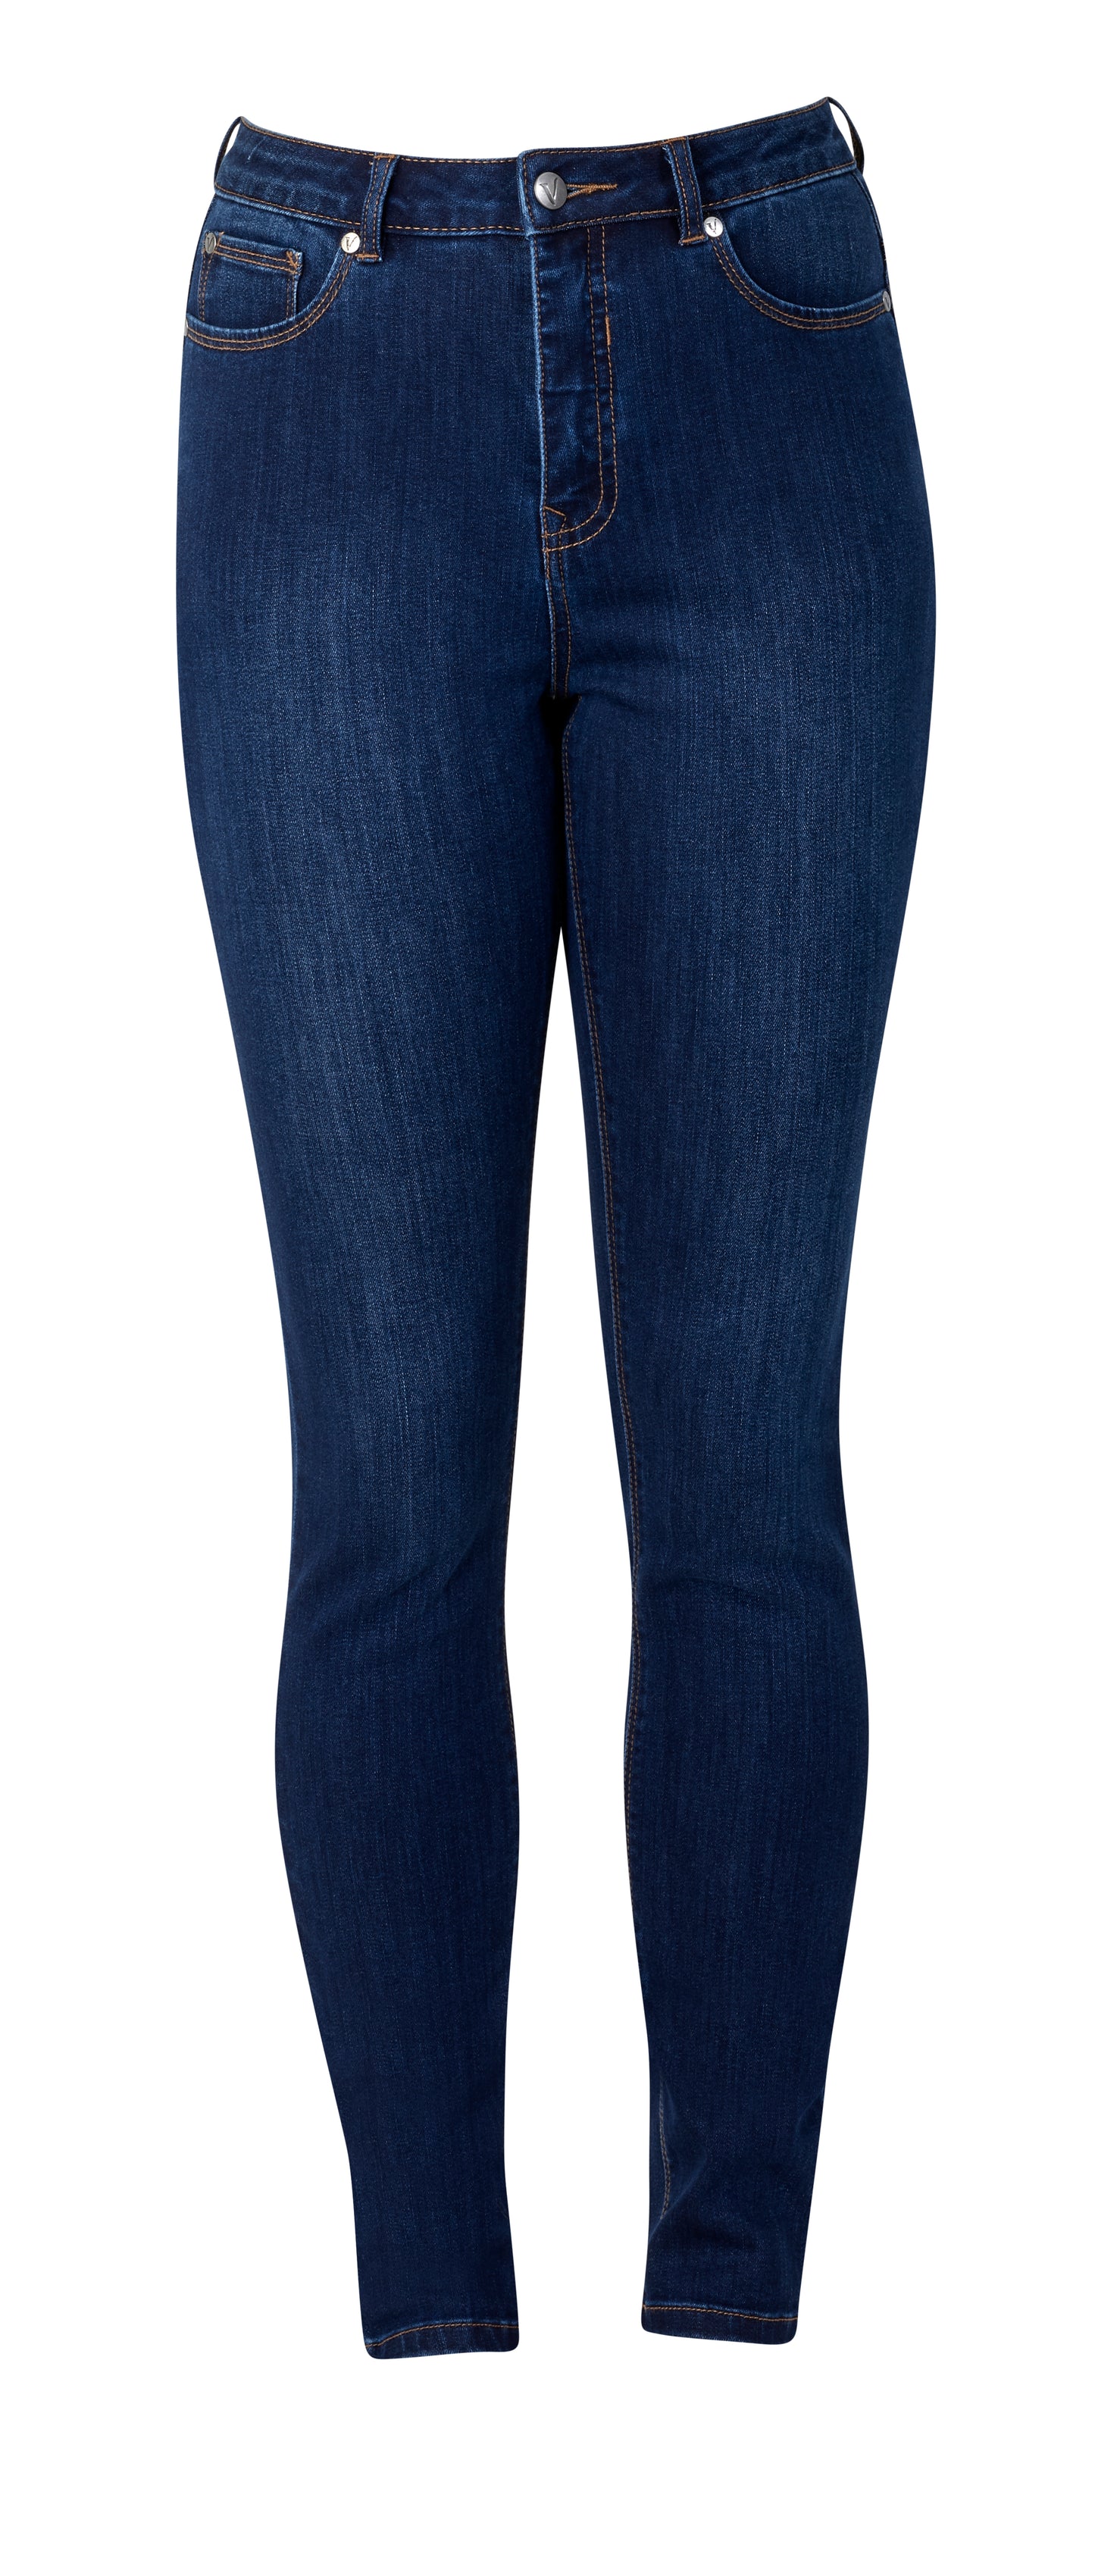 Vassalli - Style 5897 - Skinny Full Length Jean - Indigo